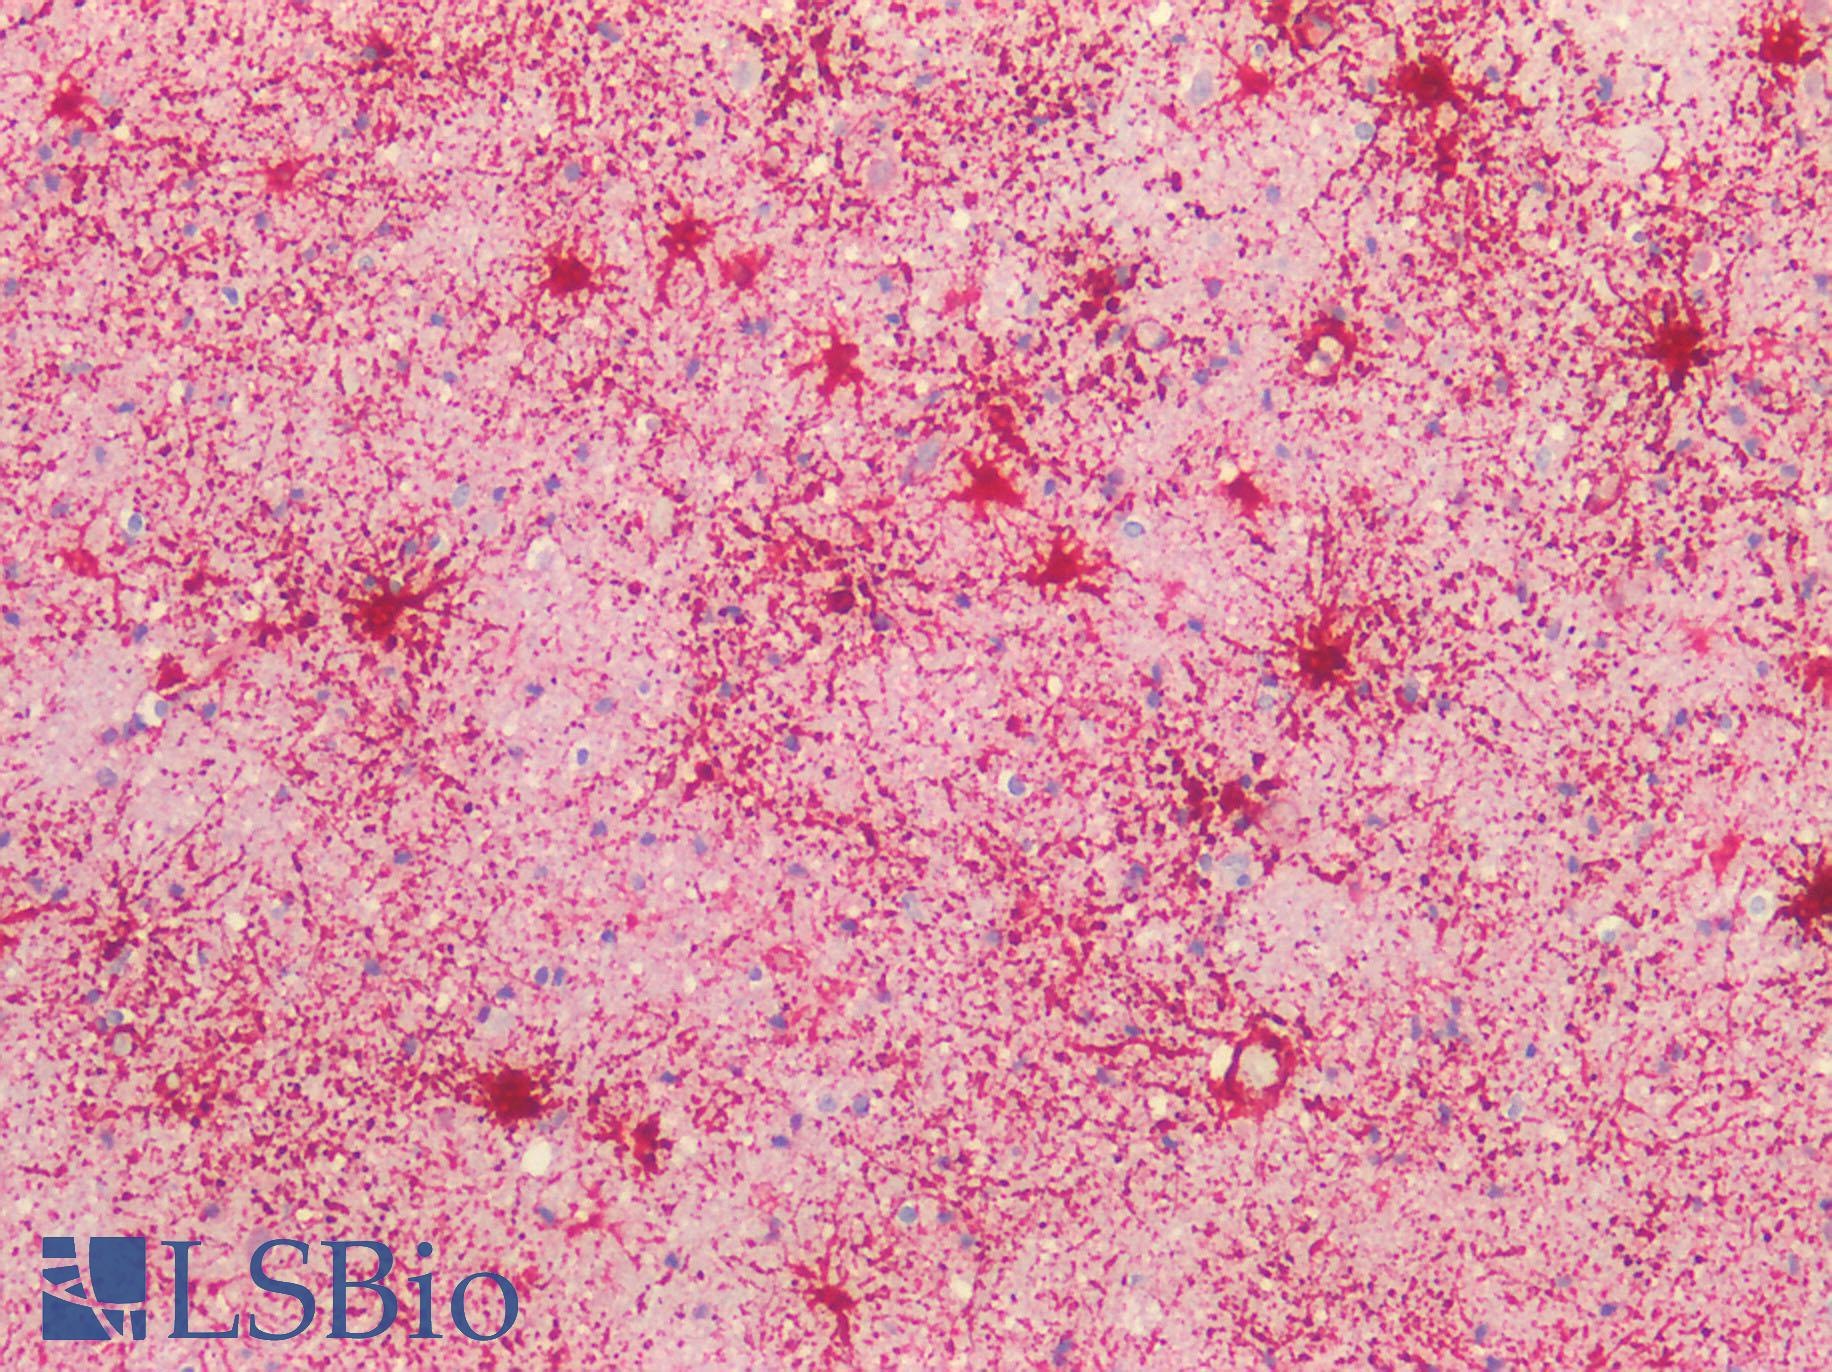 GFAP Antibody - Human Brain, Cortex: Formalin-Fixed, Paraffin-Embedded (FFPE) HIER using 10 mM sodium citrate buffer pH 6.0